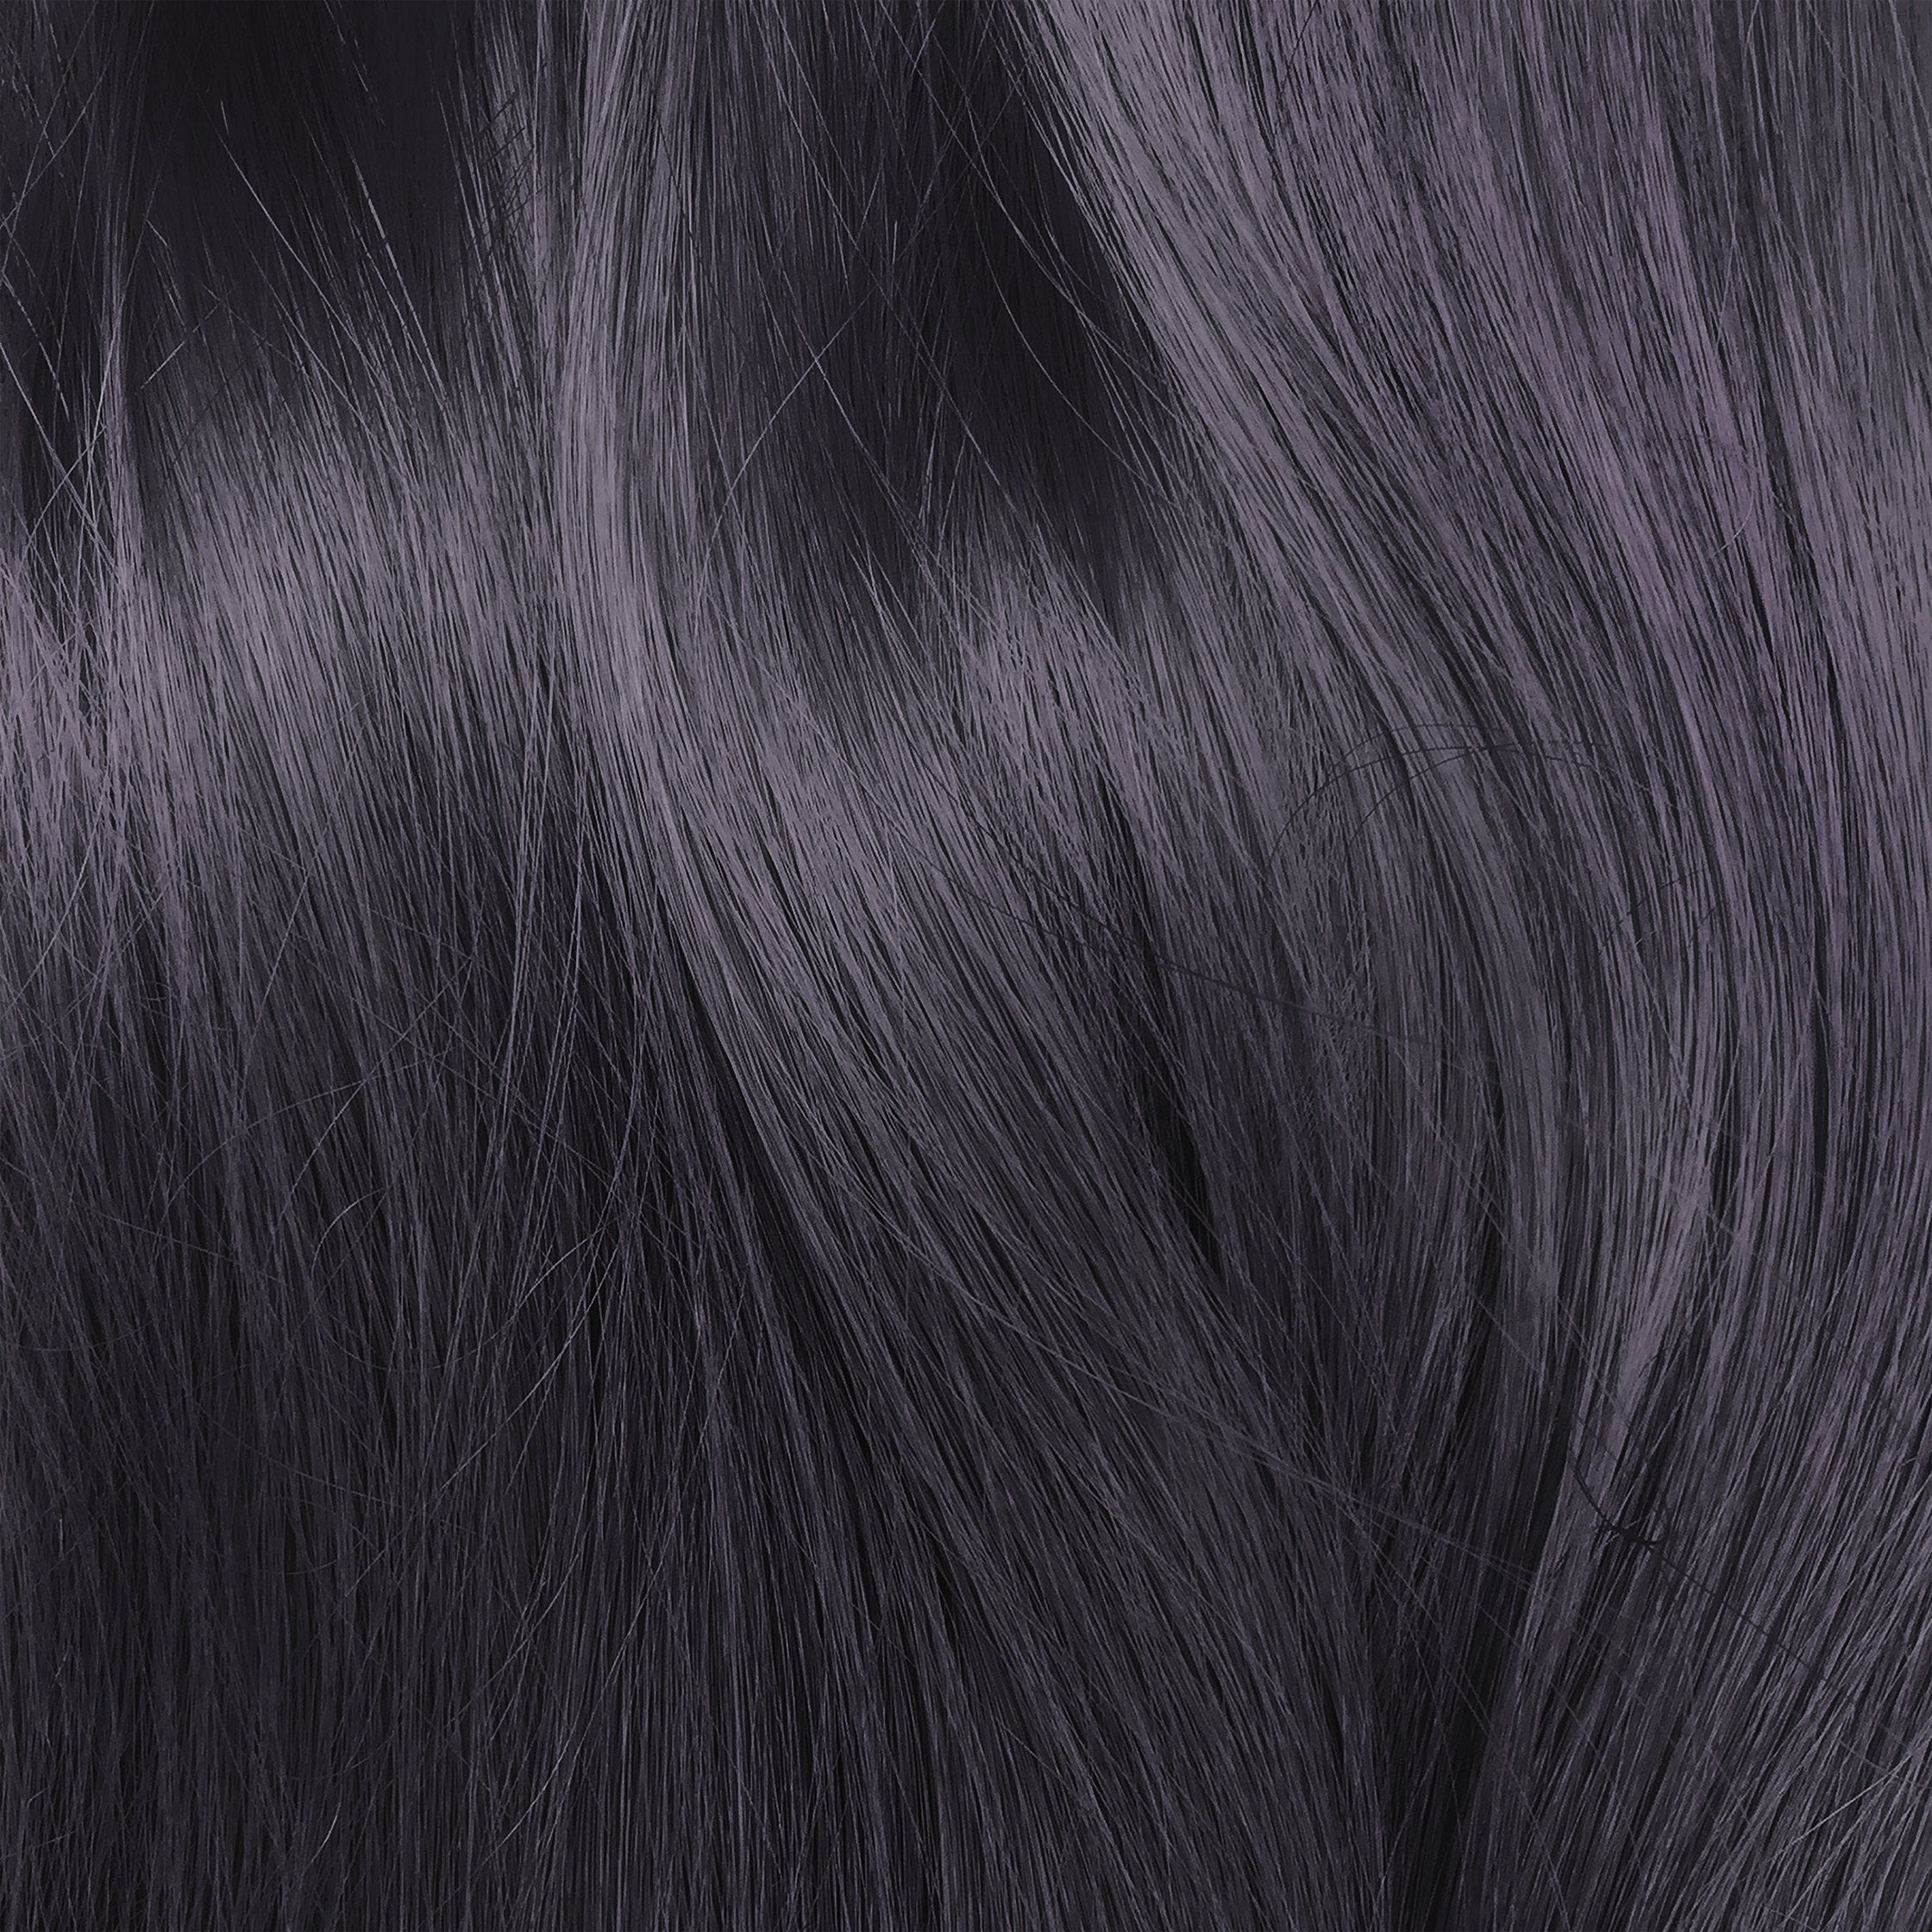 Unicorn Hair Full Coverage variant:Charcoal